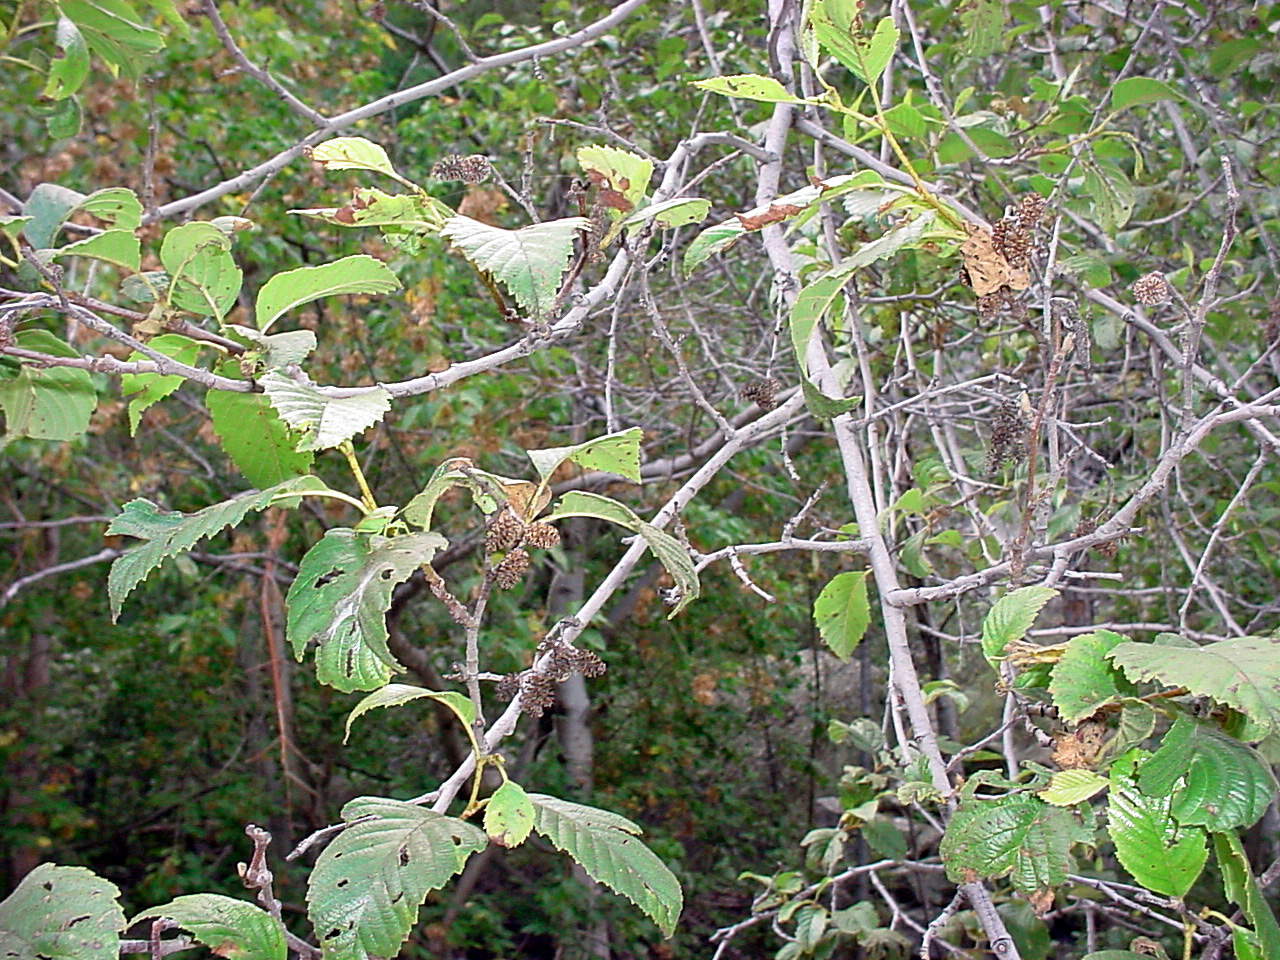 Alternate arrangement of leaves on twigs